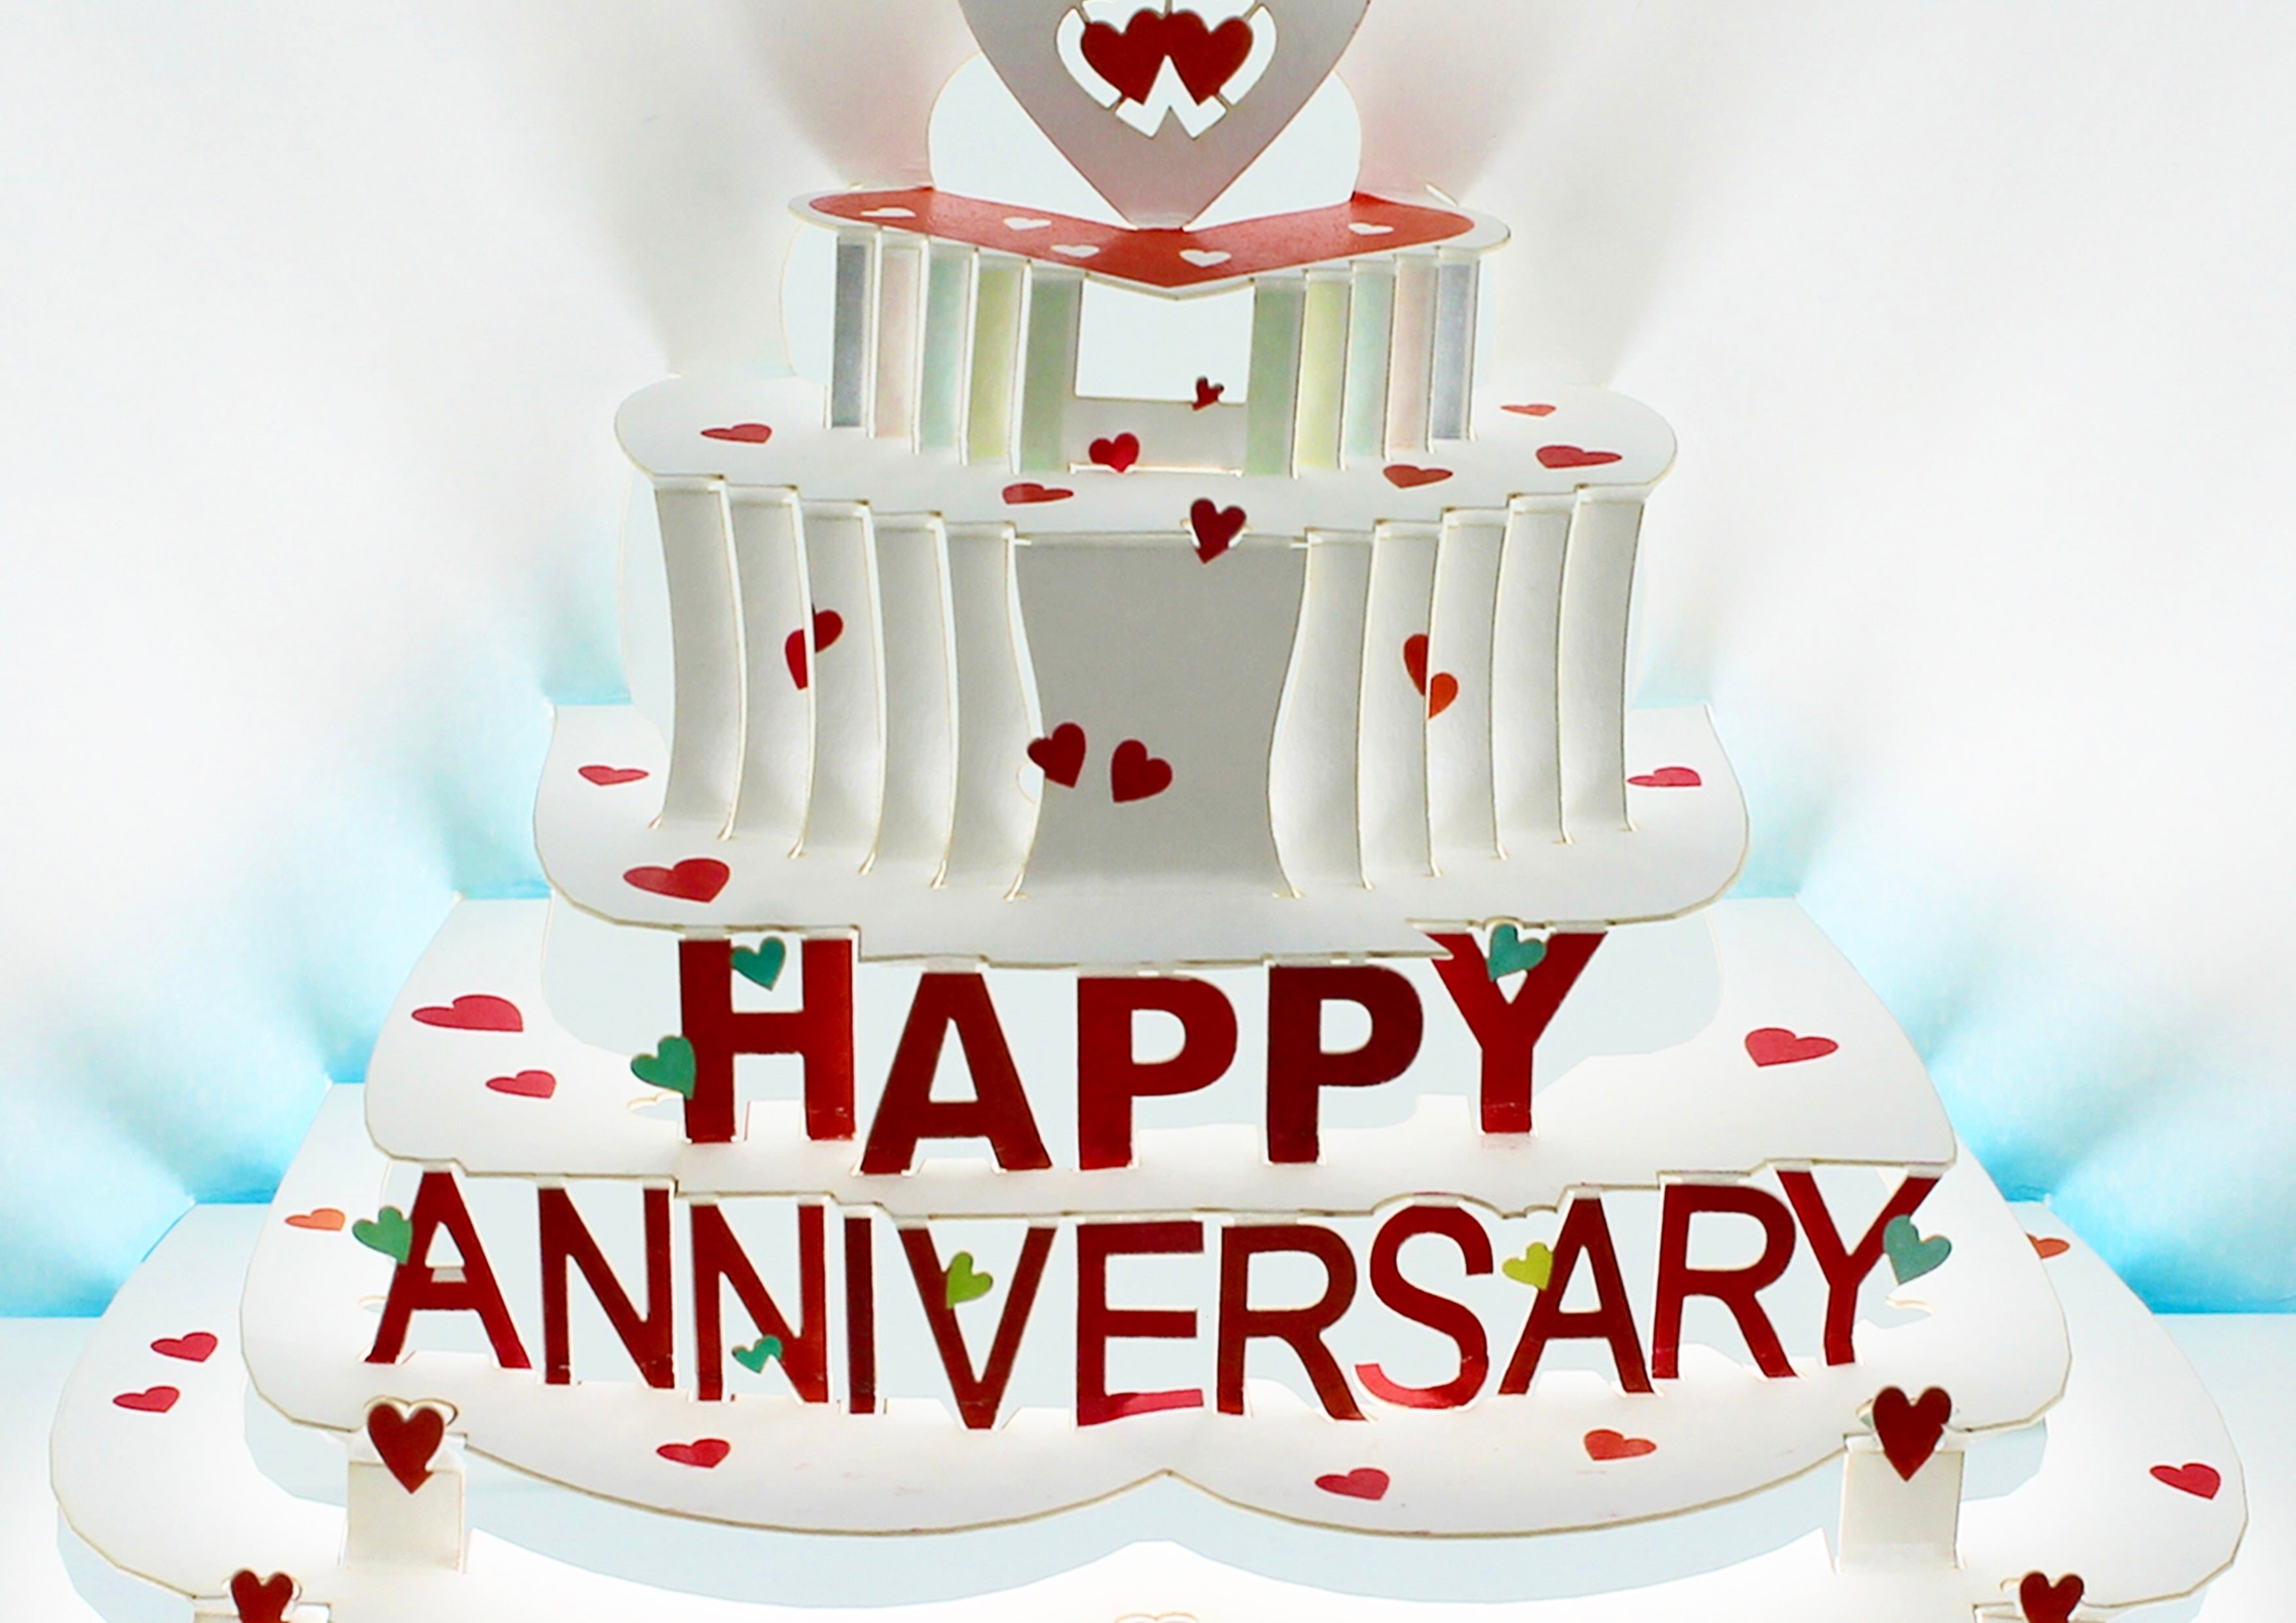 Happy Anniversary Cake 3D Pop Up Blank Celebration Greeting Card